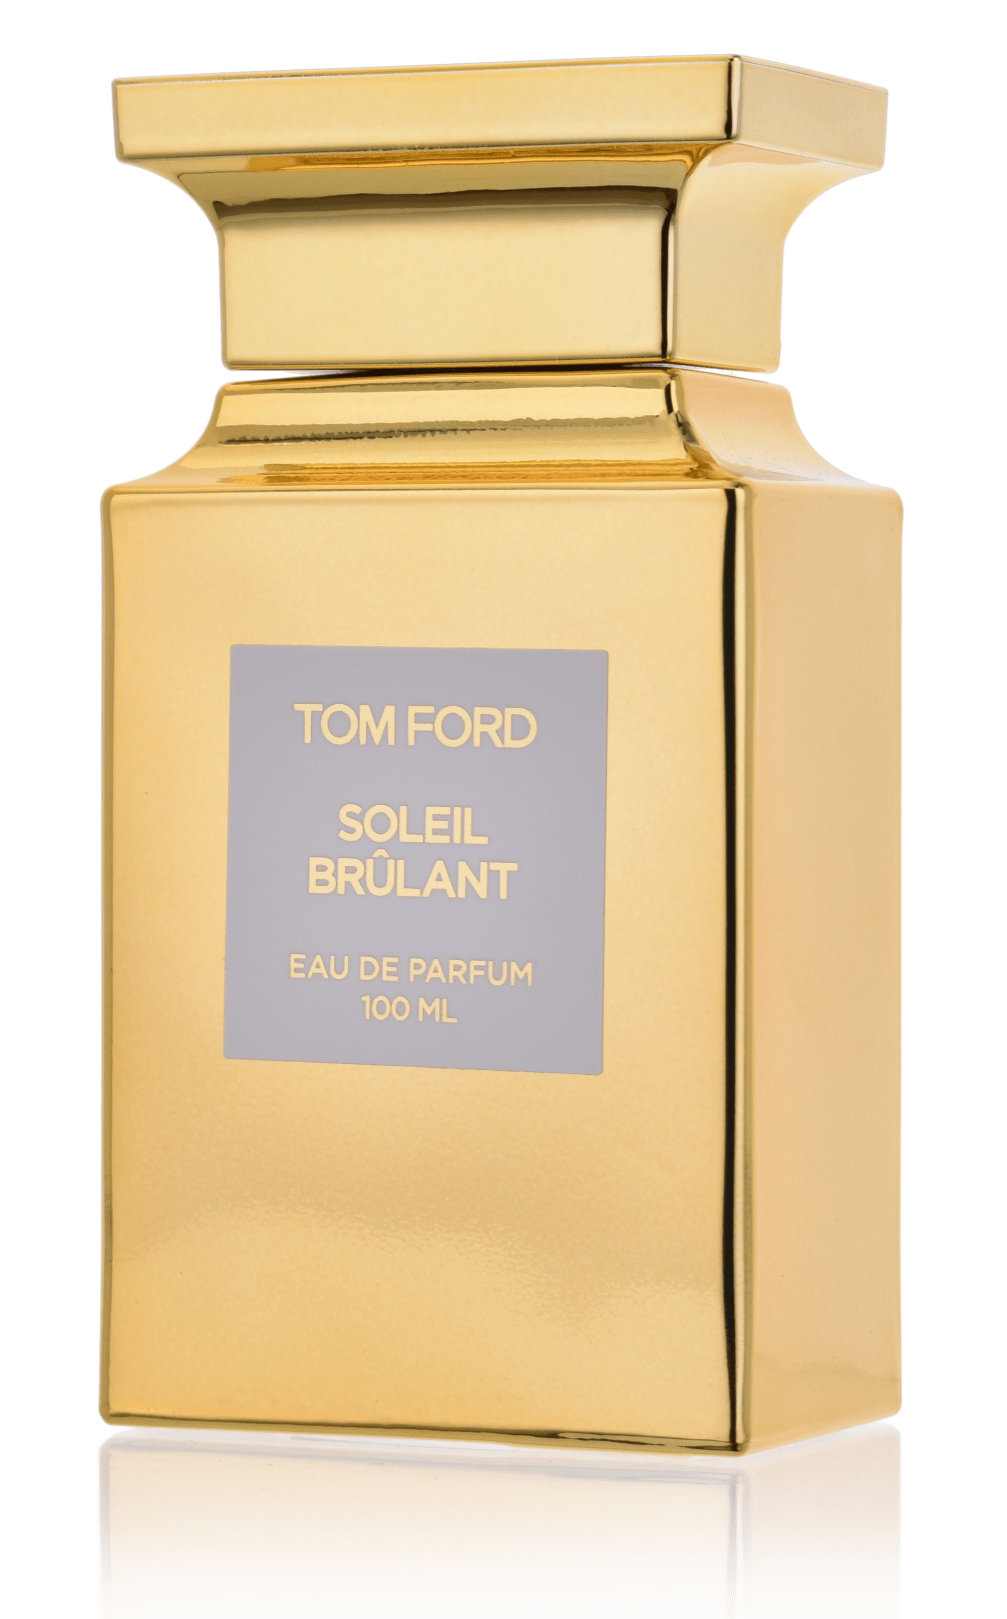 Tom Ford Soleil Brulant 100 ml Eau de Parfum | 888066131384